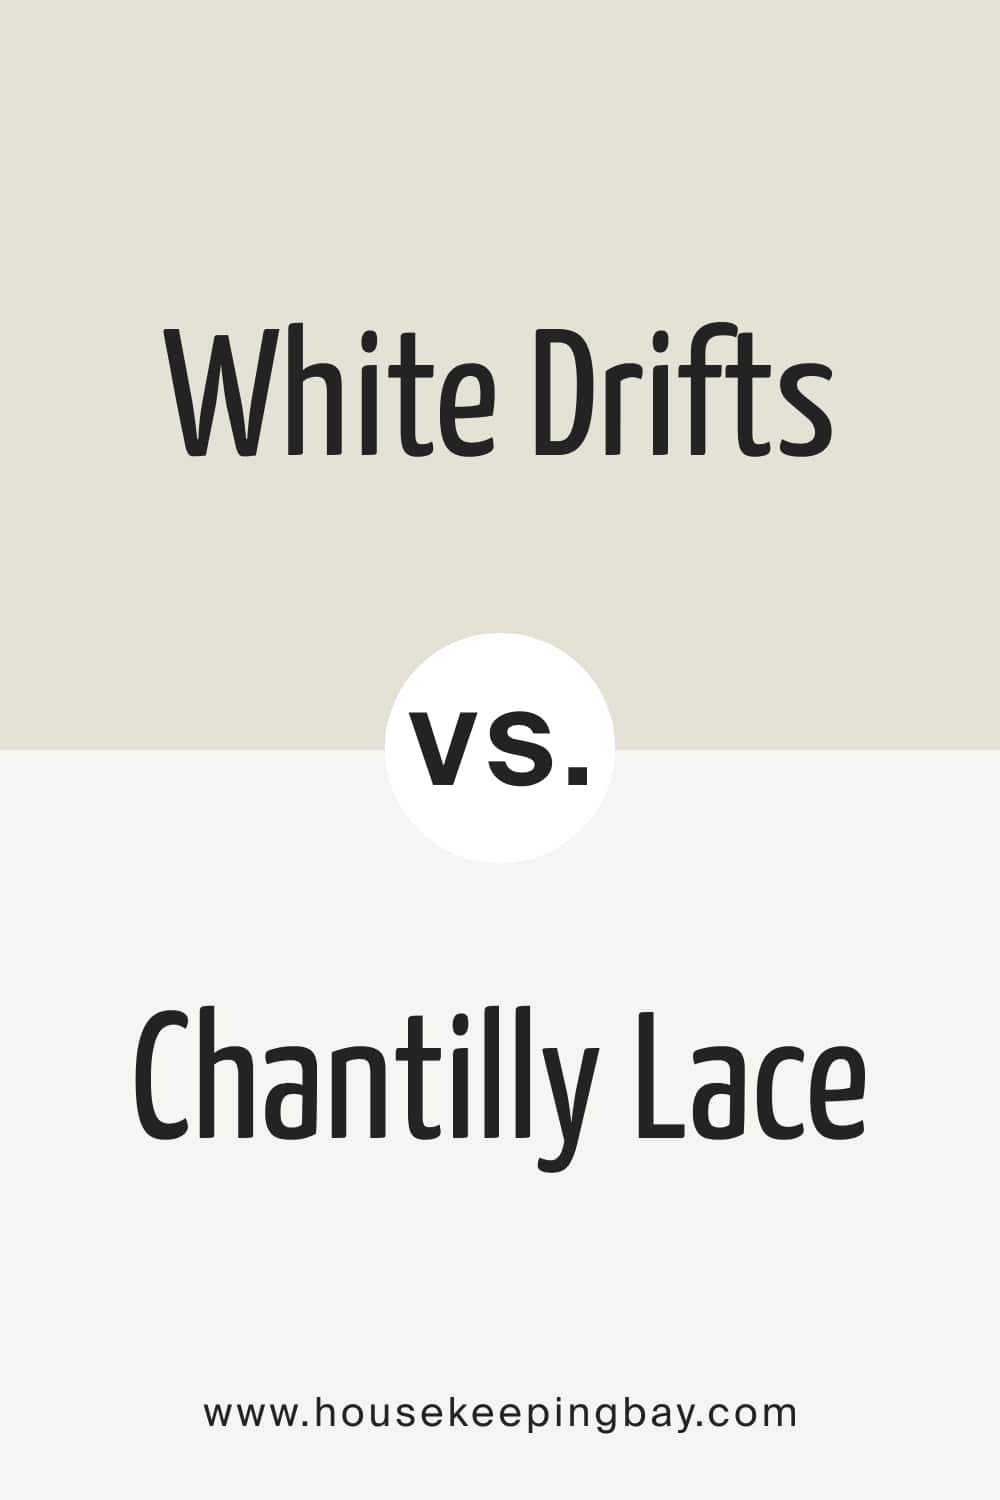 White Drifts vs Chantilly Lace